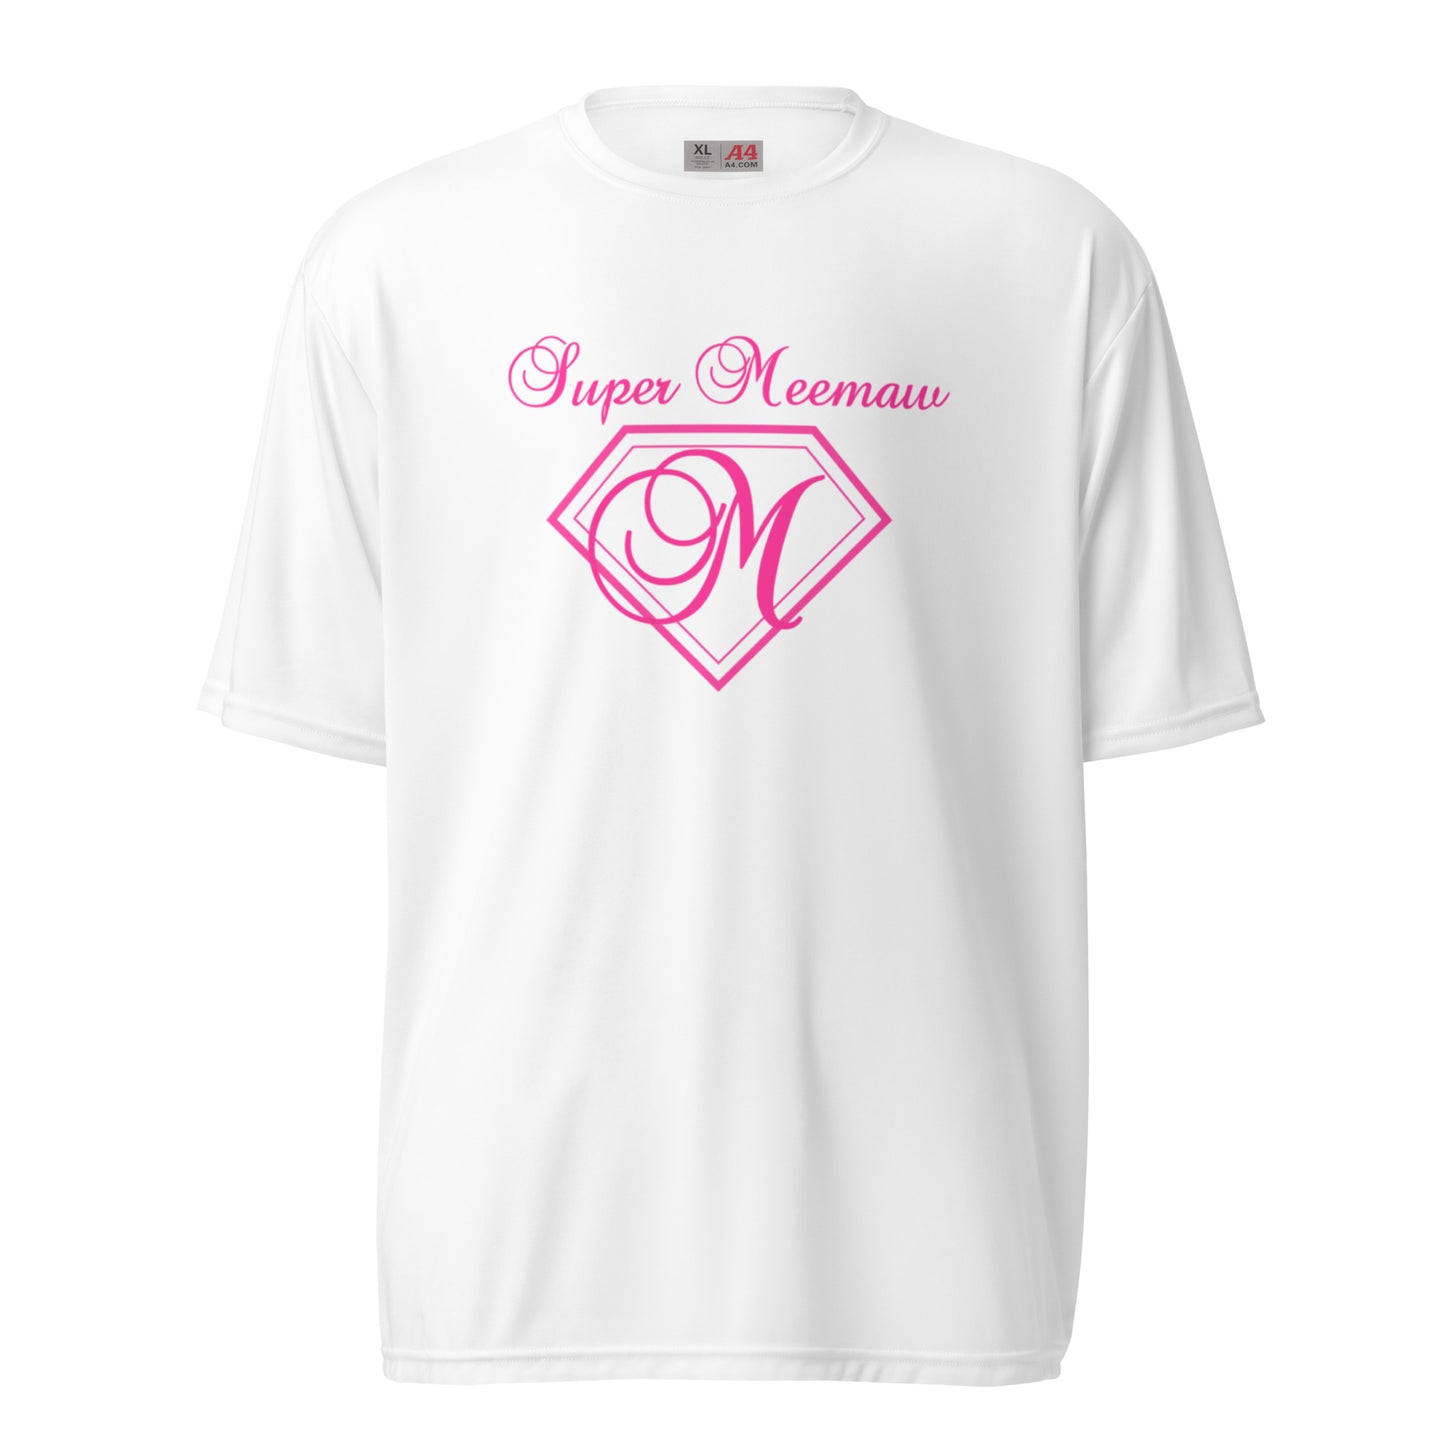 Super Meemaw unisex performance crew neck t-shirt - Pink Print